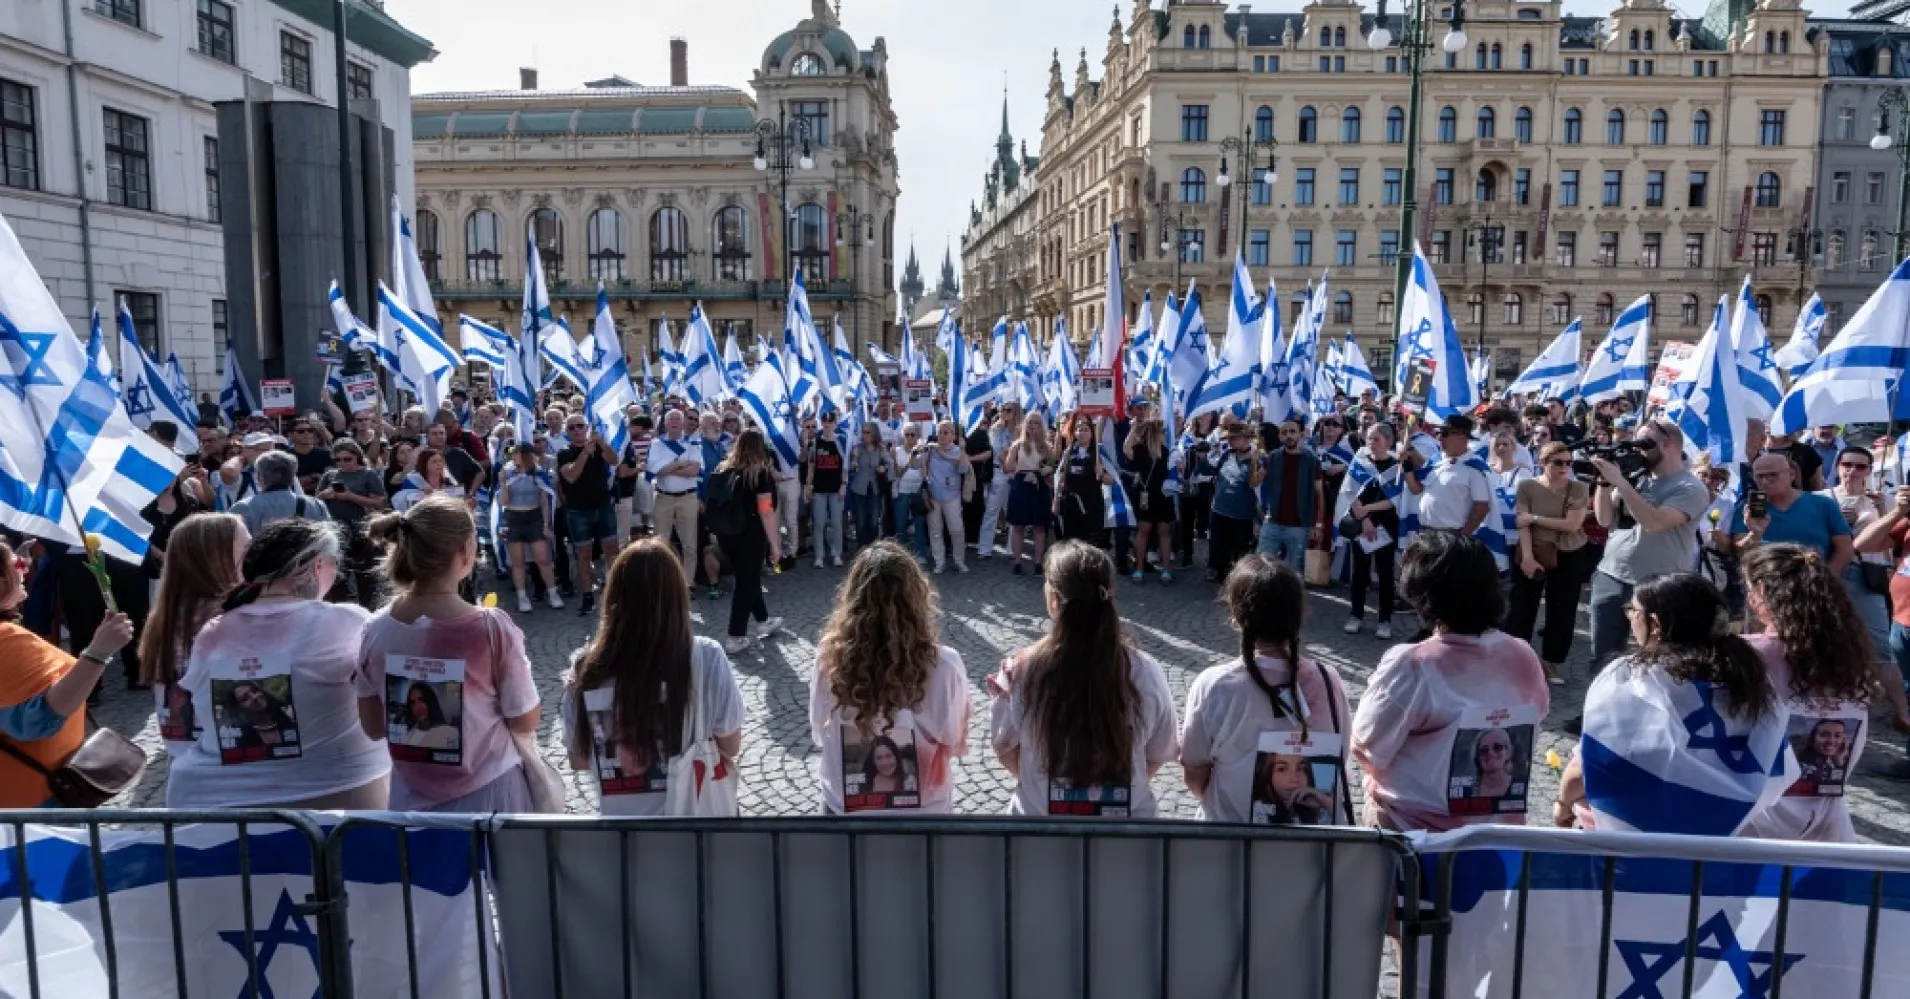 Záplava izraelských vlajek v Praze. Půl roku od útoku na Izrael demonstrovaly stovky lidí